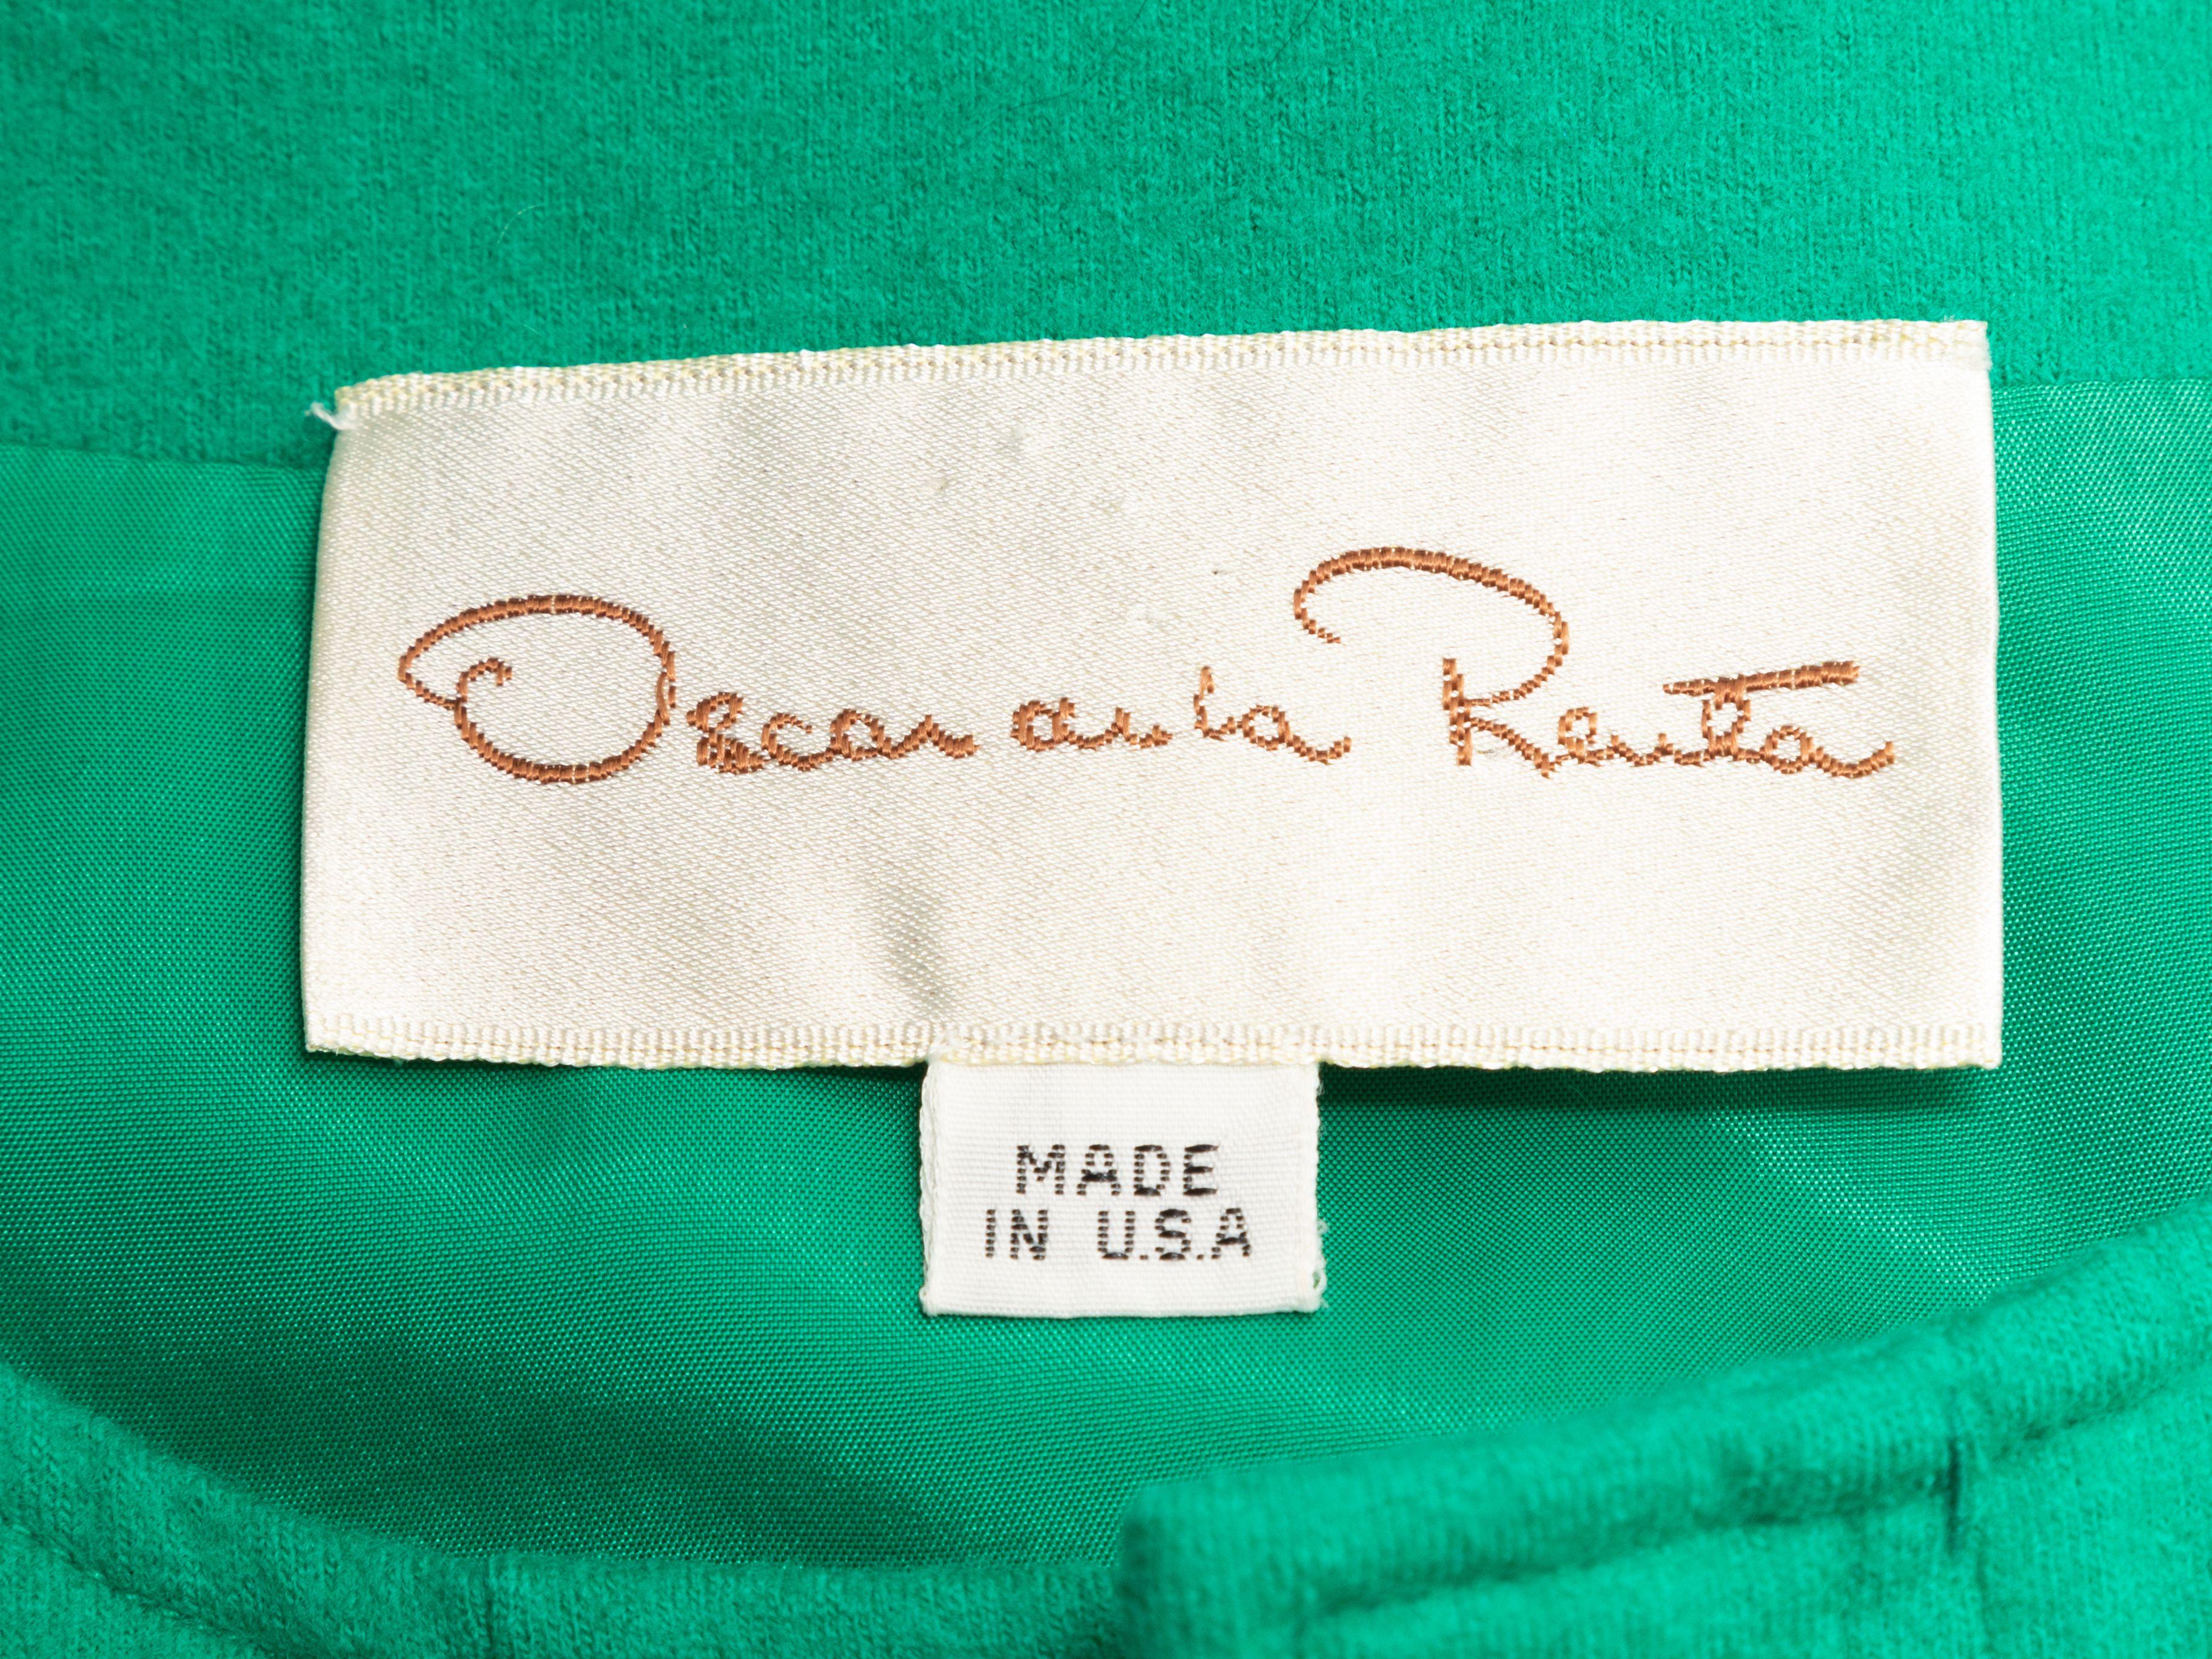 Product Details: Vintage green and black color block dress by Oscar de la Renta. Crew neck. Long sleeves. Button closures at center front. 28